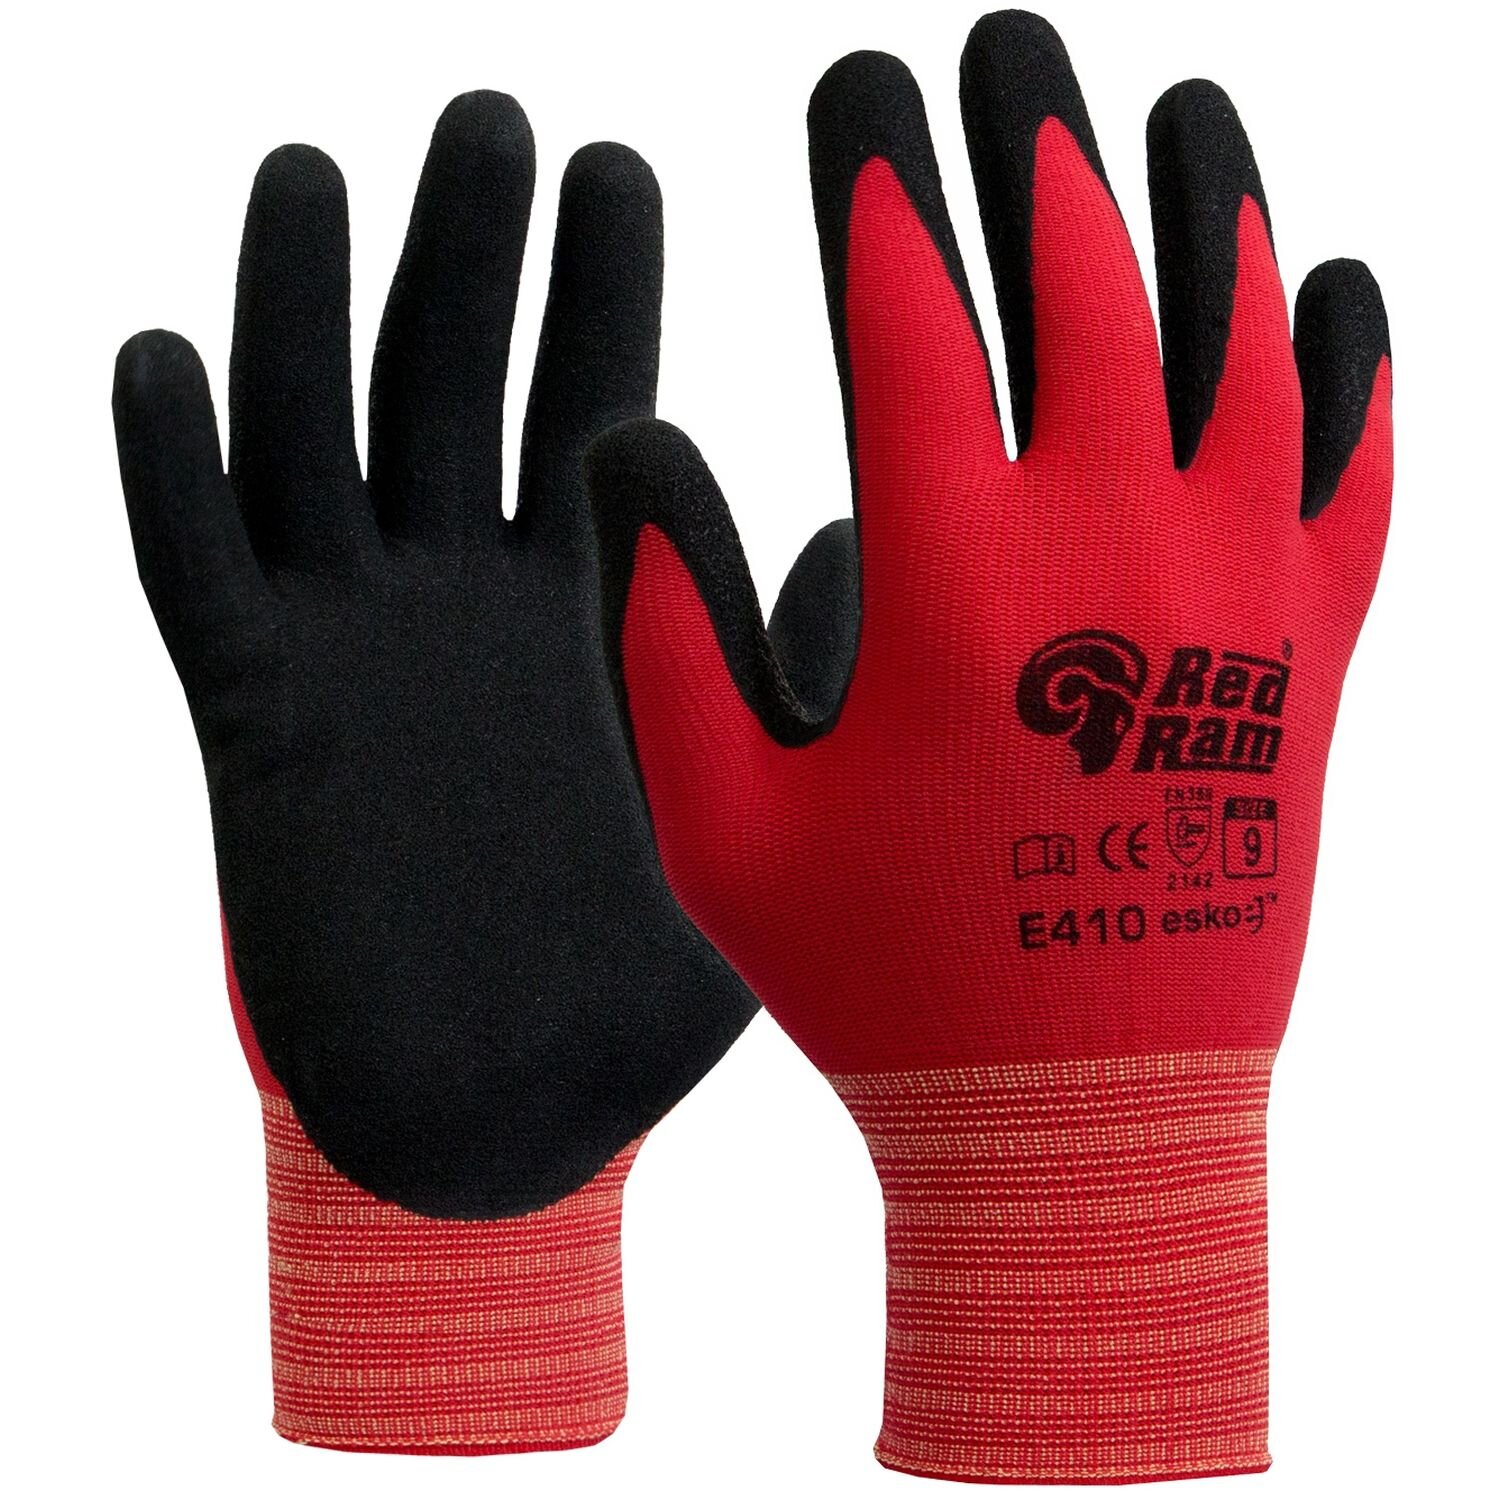 E410 Red Ram Sandy Latex Palm Coat Glove Red/Black